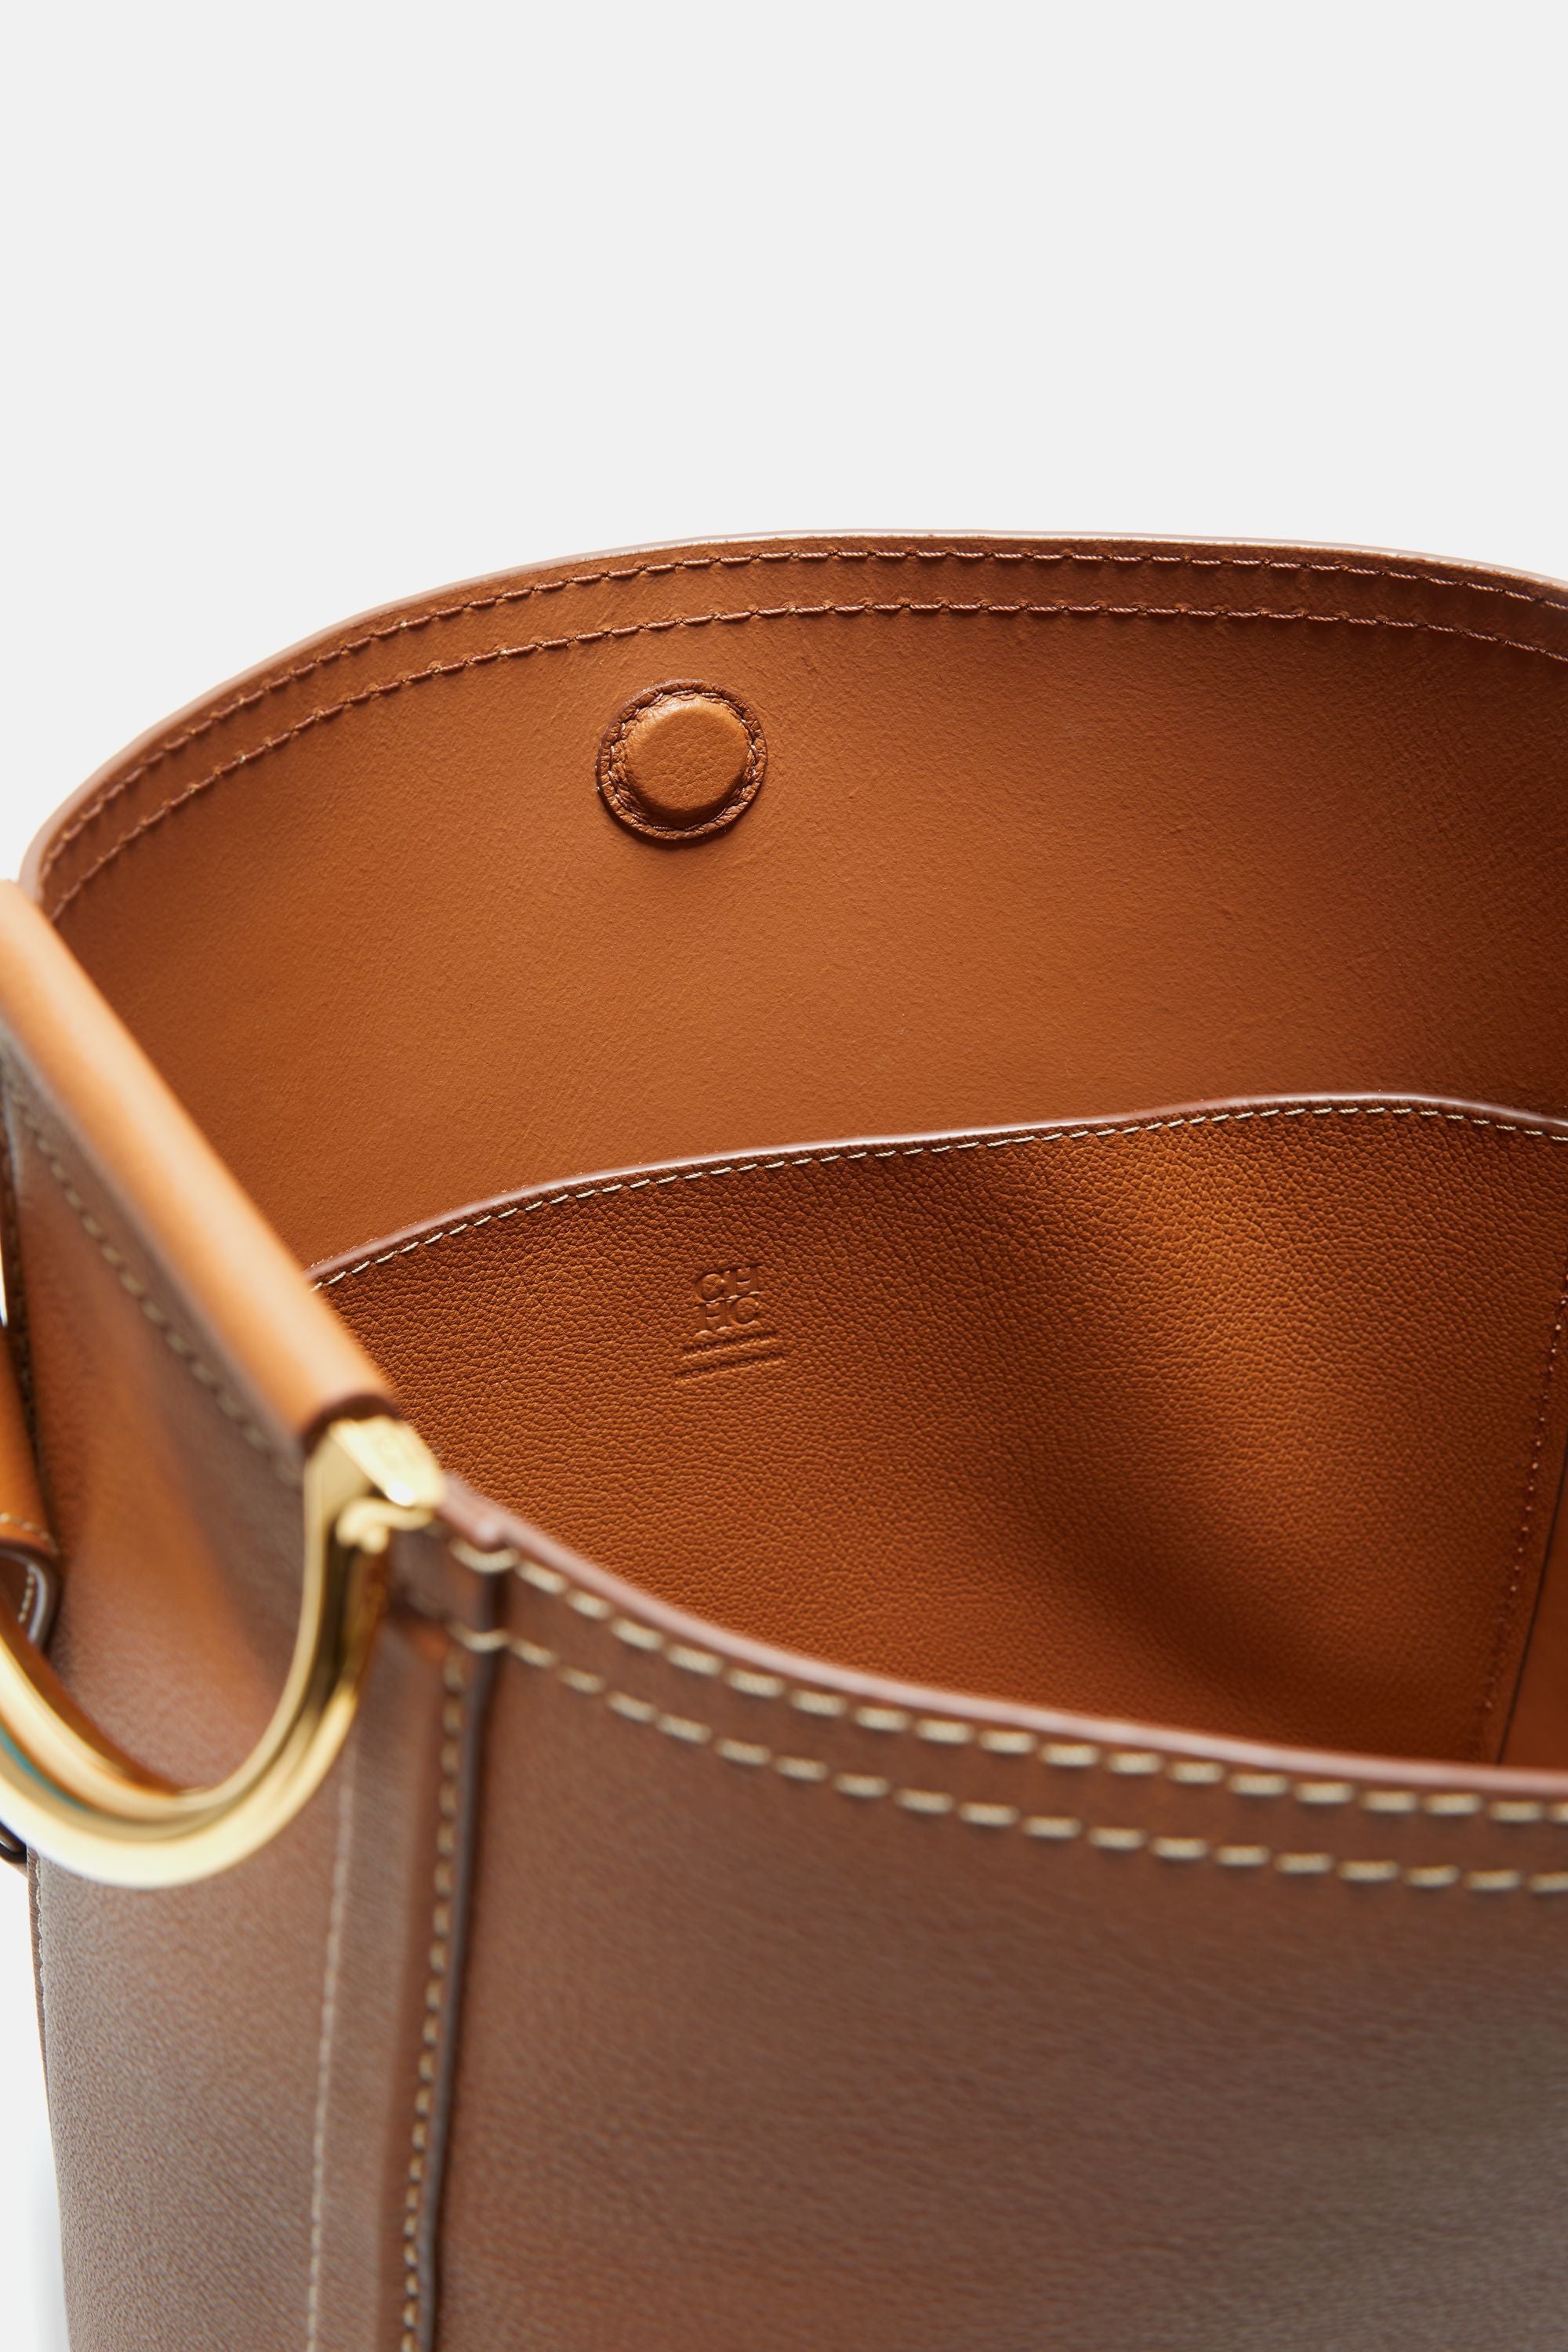 Charro Insignia Basket  Large handbag brown/beige - CH Carolina Herrera  United States